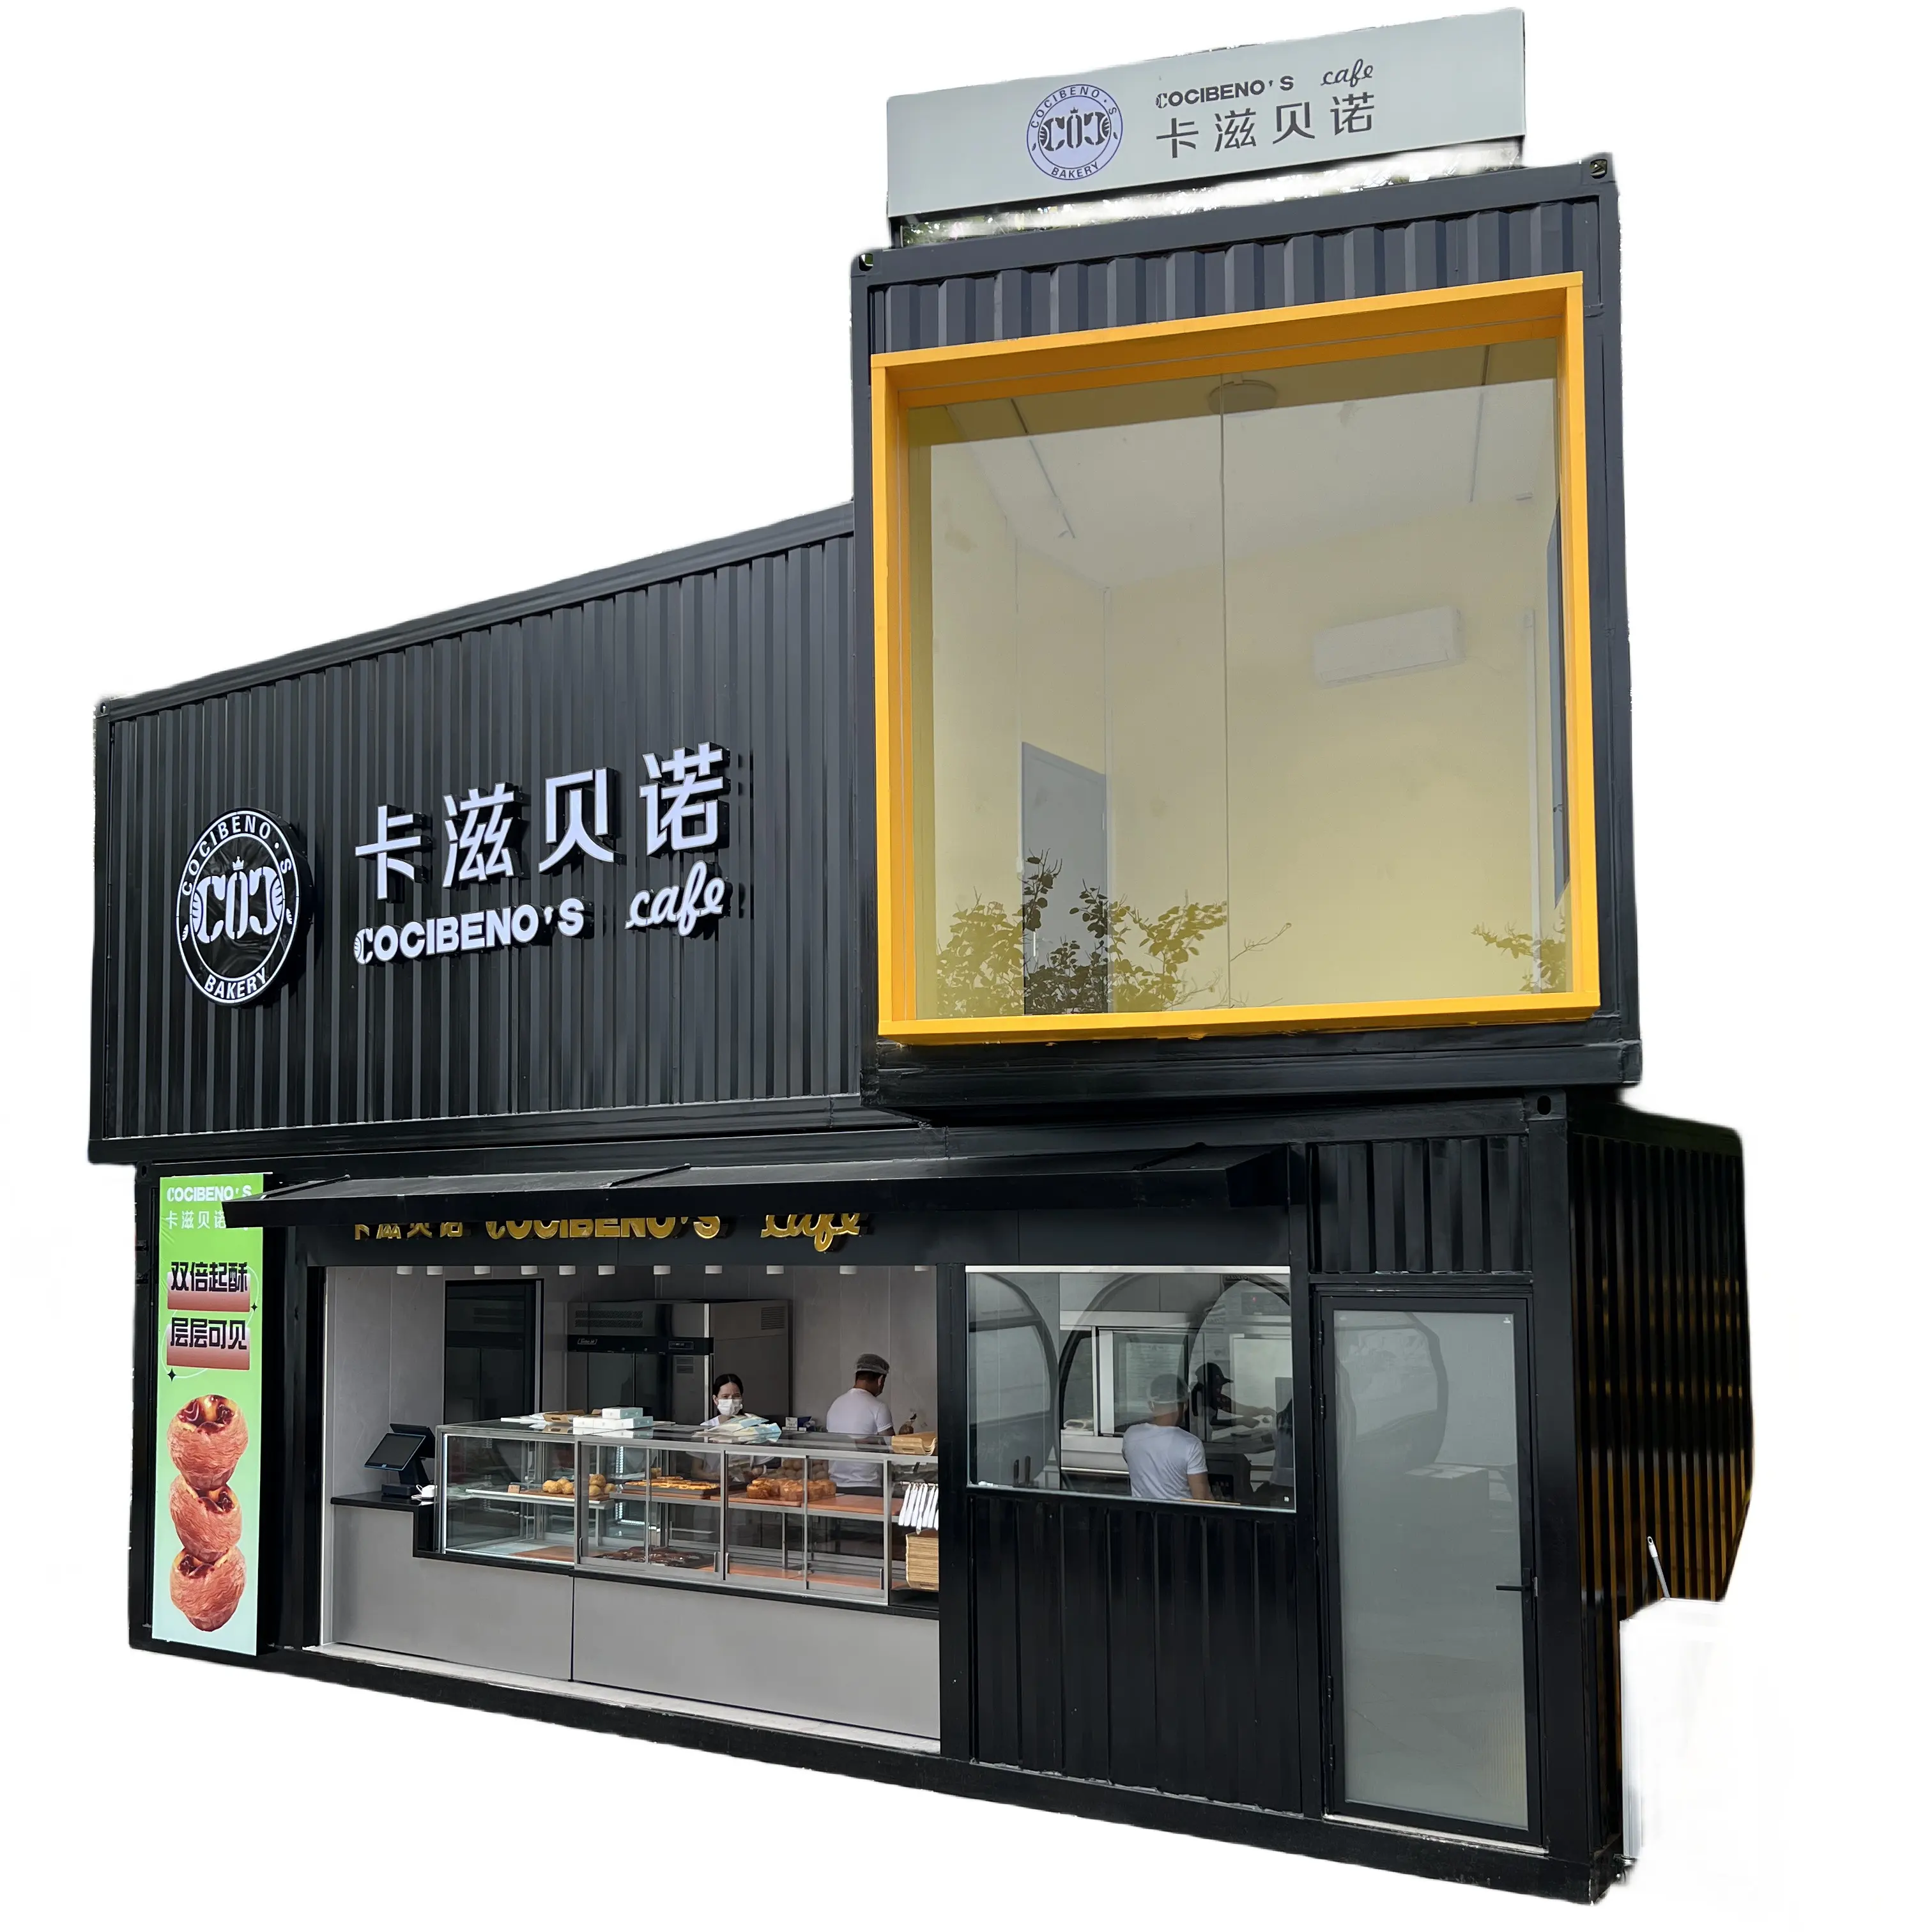 Kontainer pengiriman Modular Restoran Modular Mall belanja rumah kopi Bar 40 kaki wadah